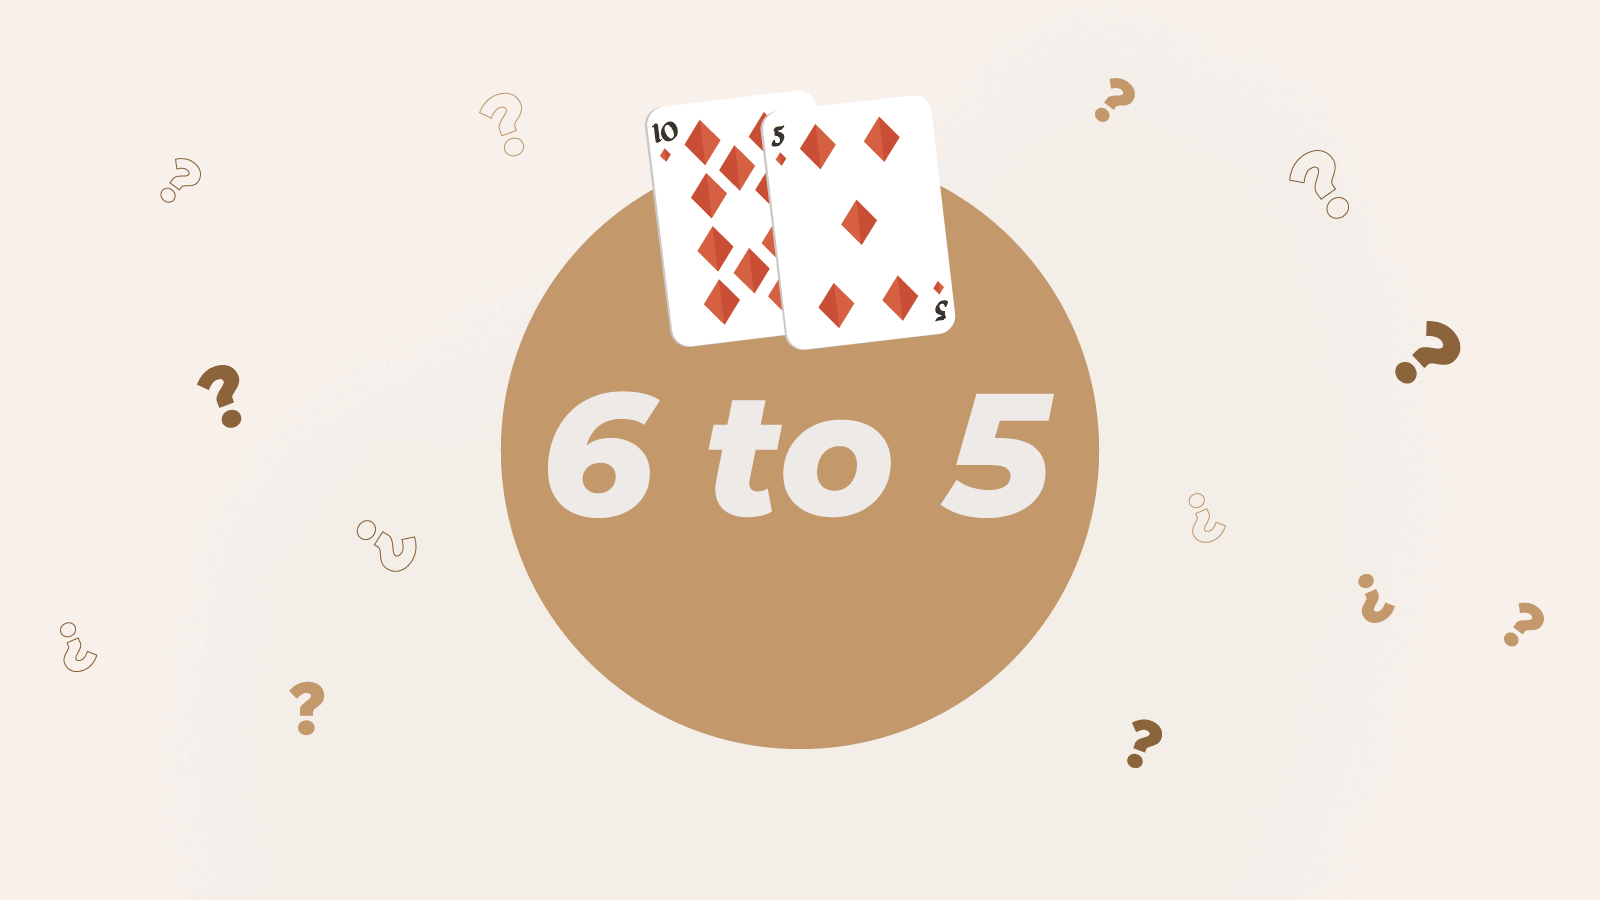 Should you go for 6 to 5 blackjack games